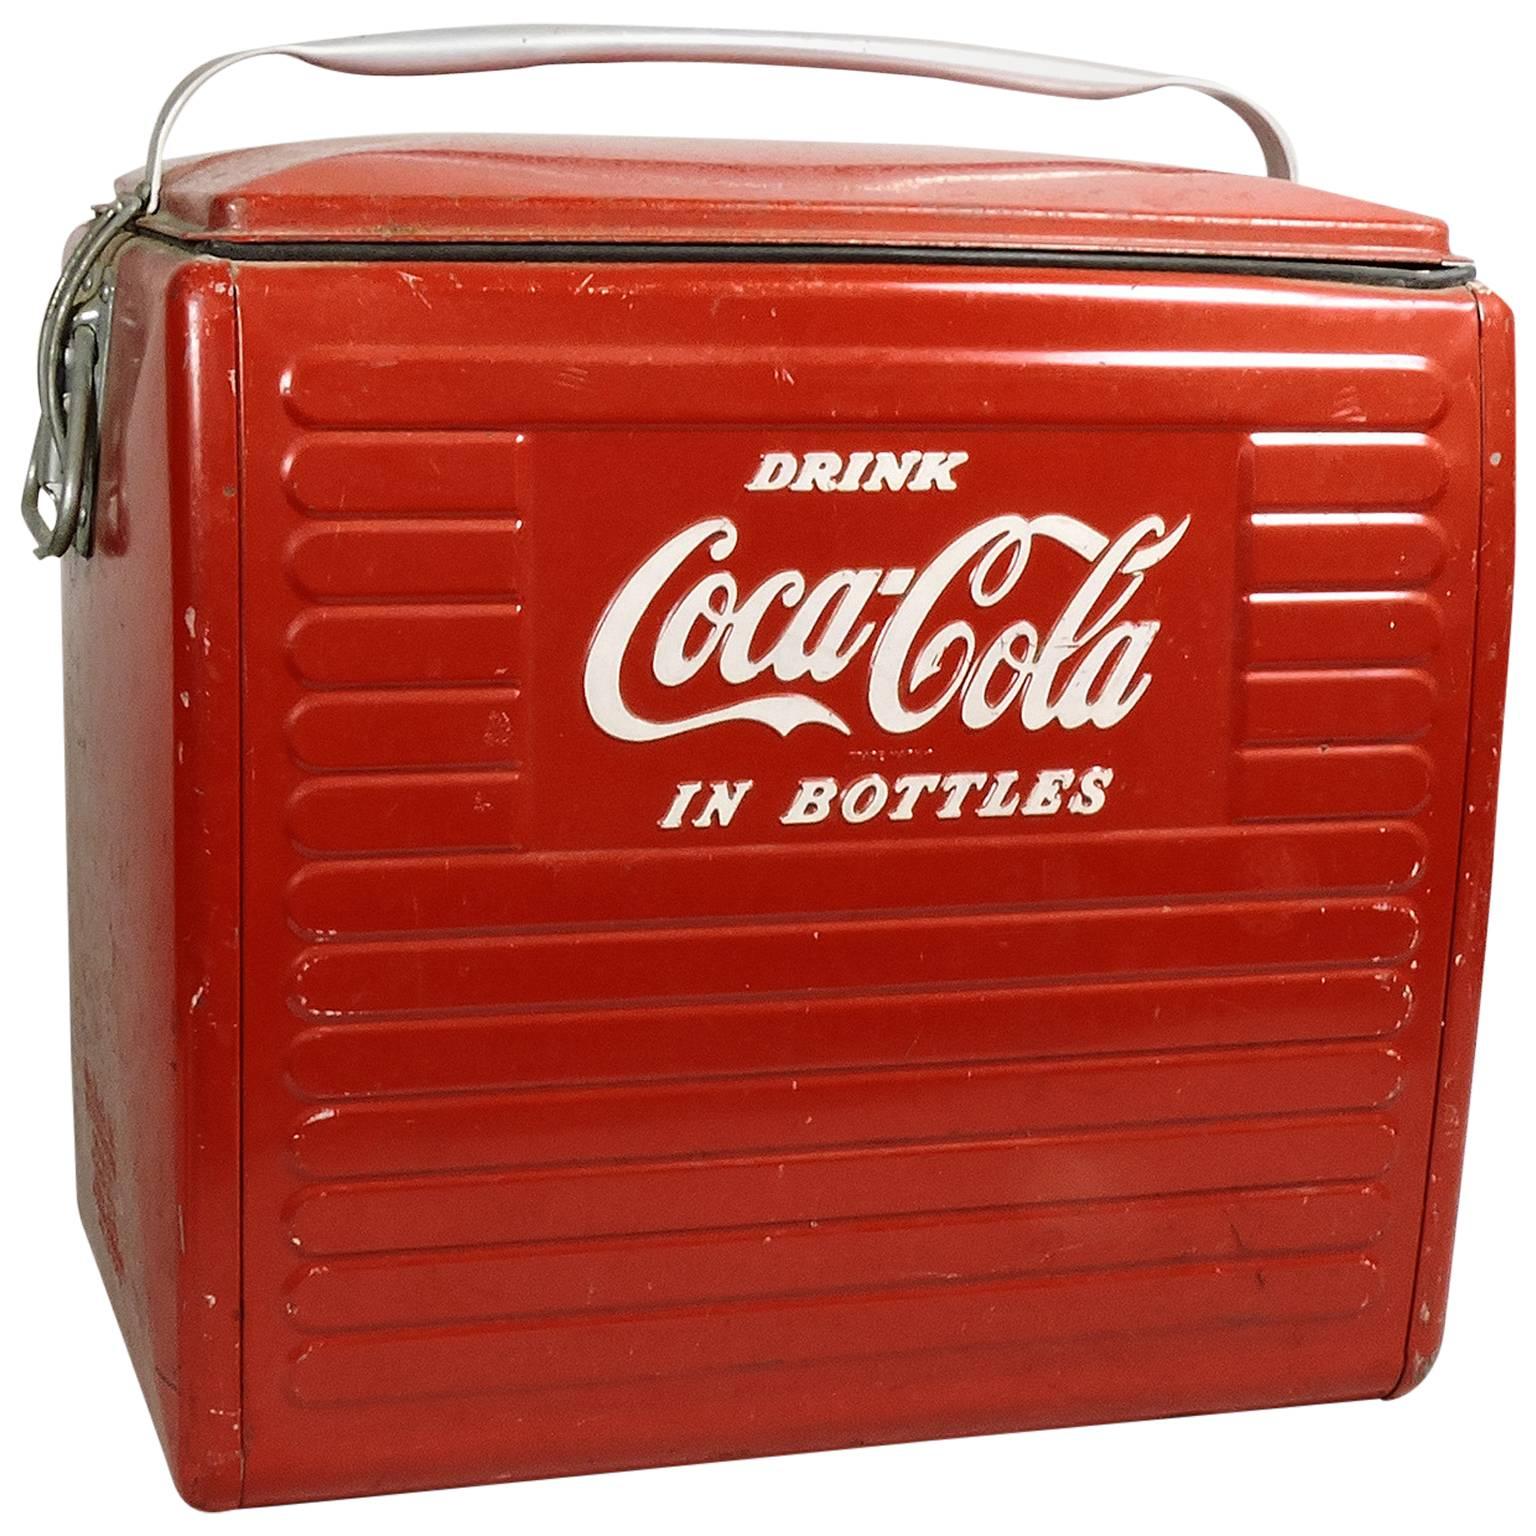 Vintage Drink Coca Cola in Bottles Picnic Cooler by Acton Mfg Co.